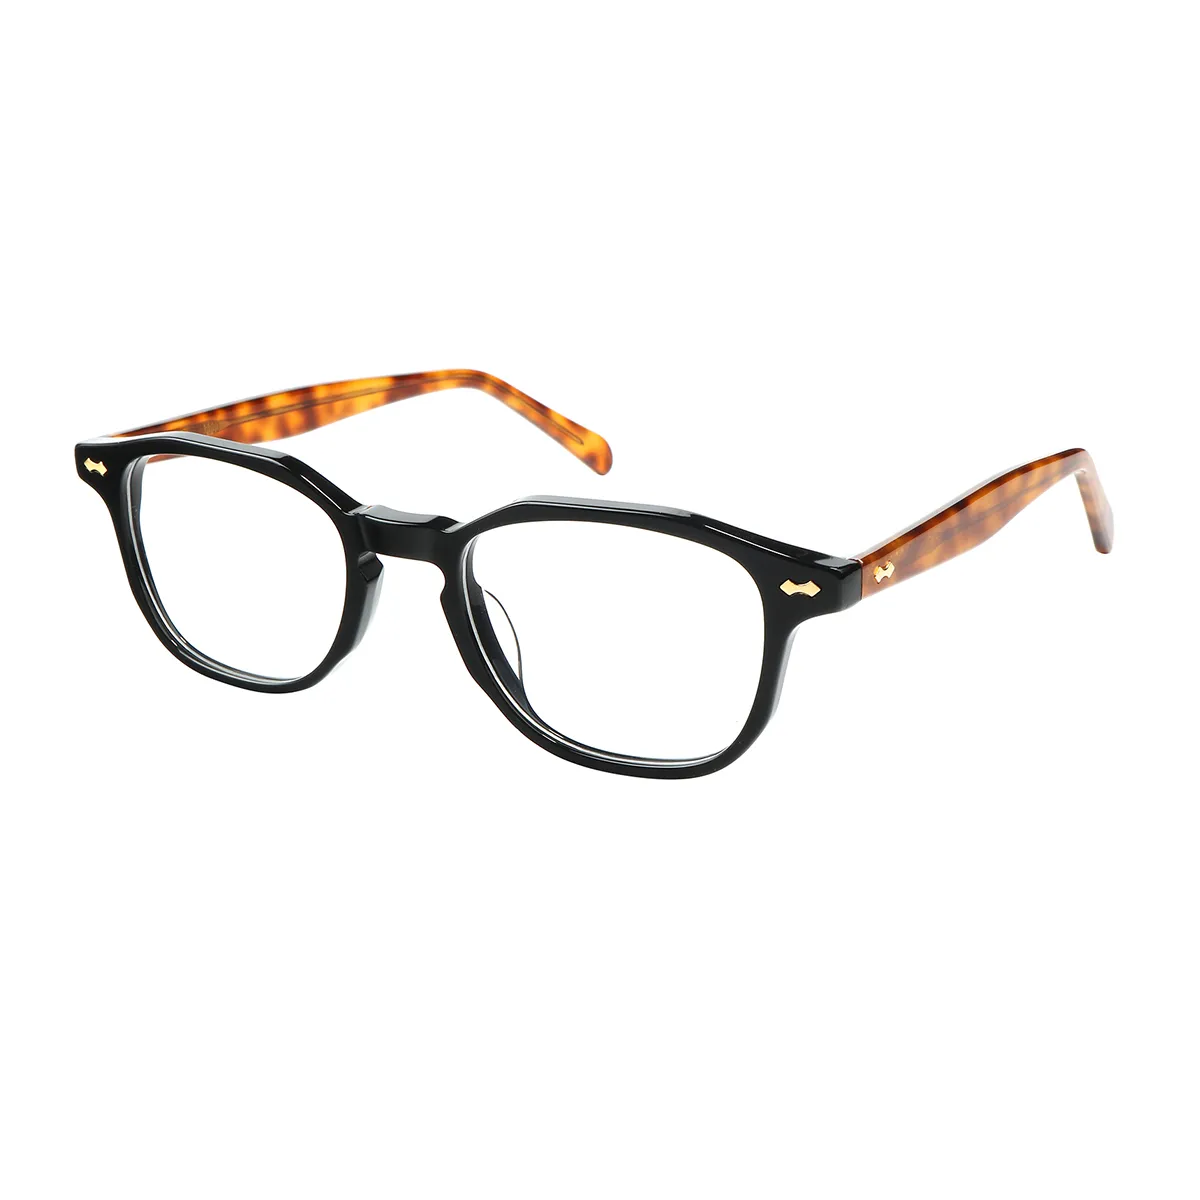 Allais - Square Black Glasses for Men & Women - EFE